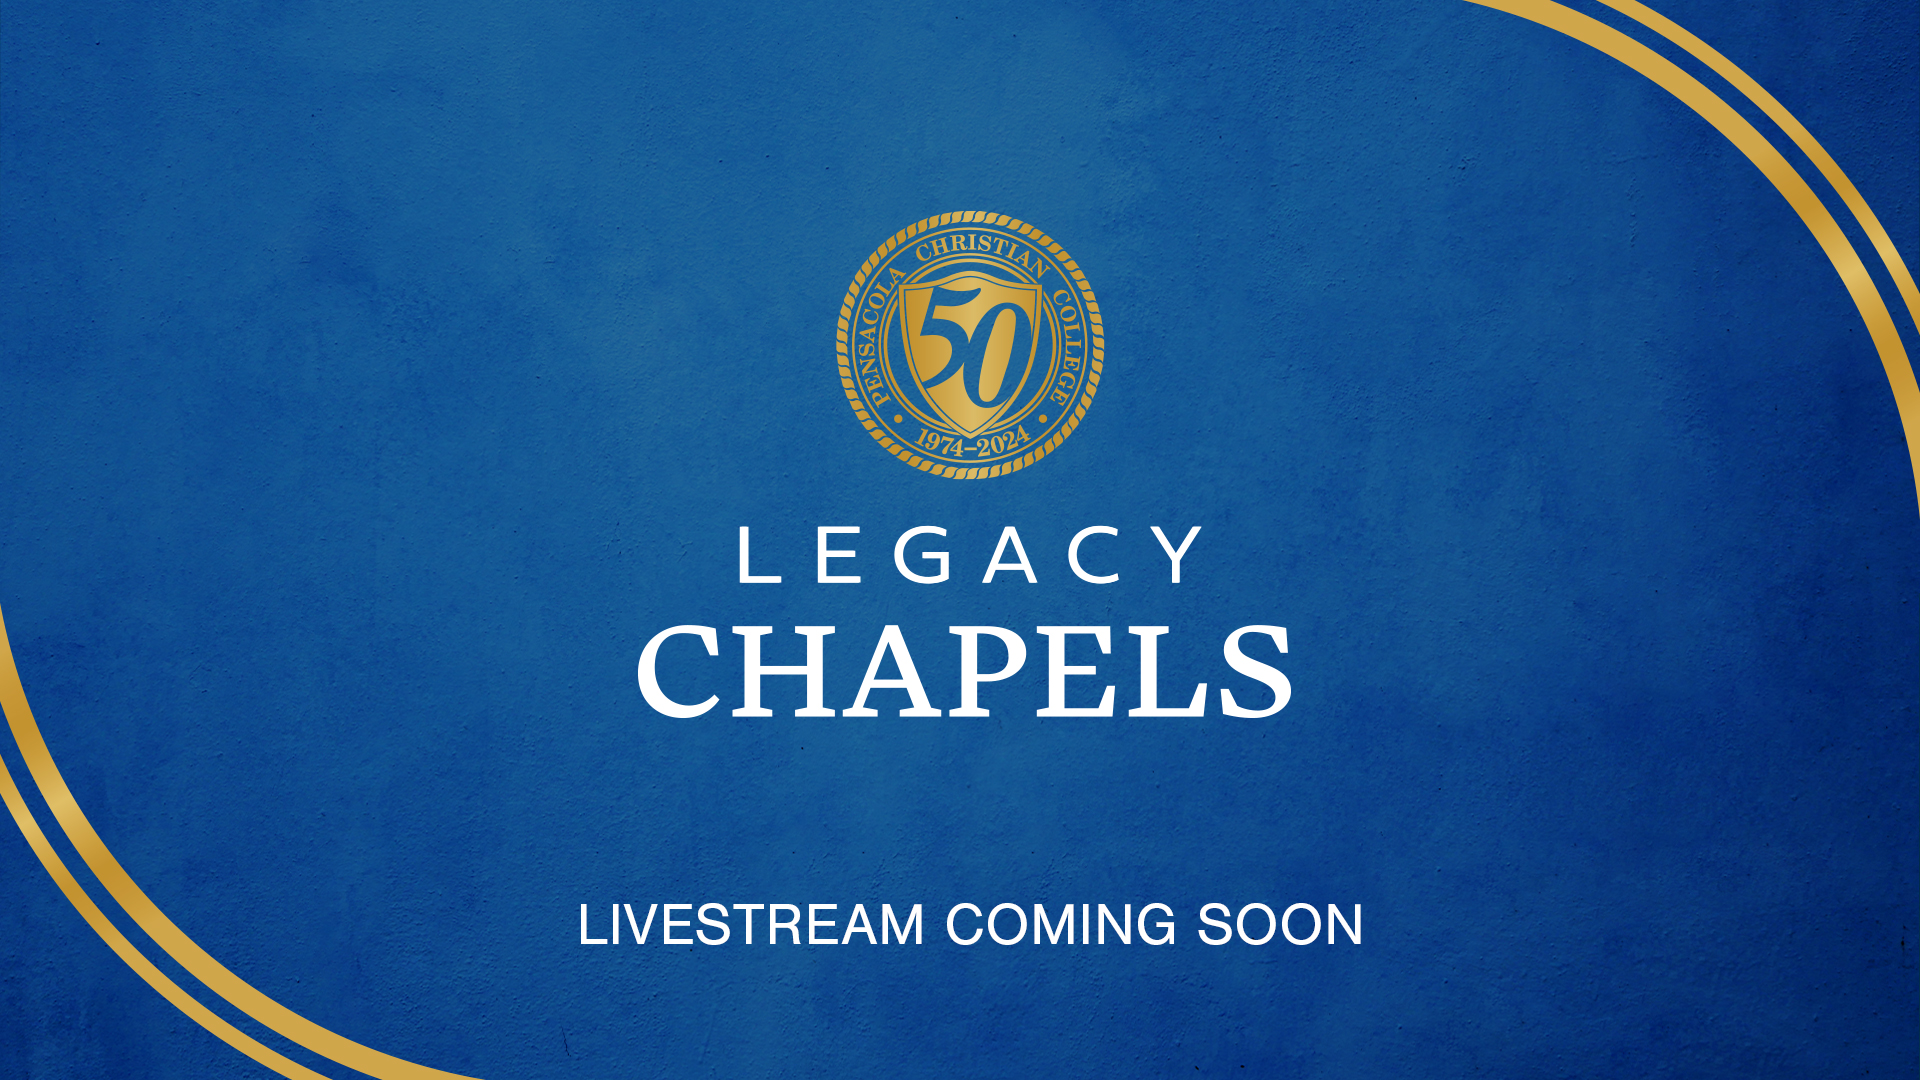 Legacy Chapels Livestream Coming Soon